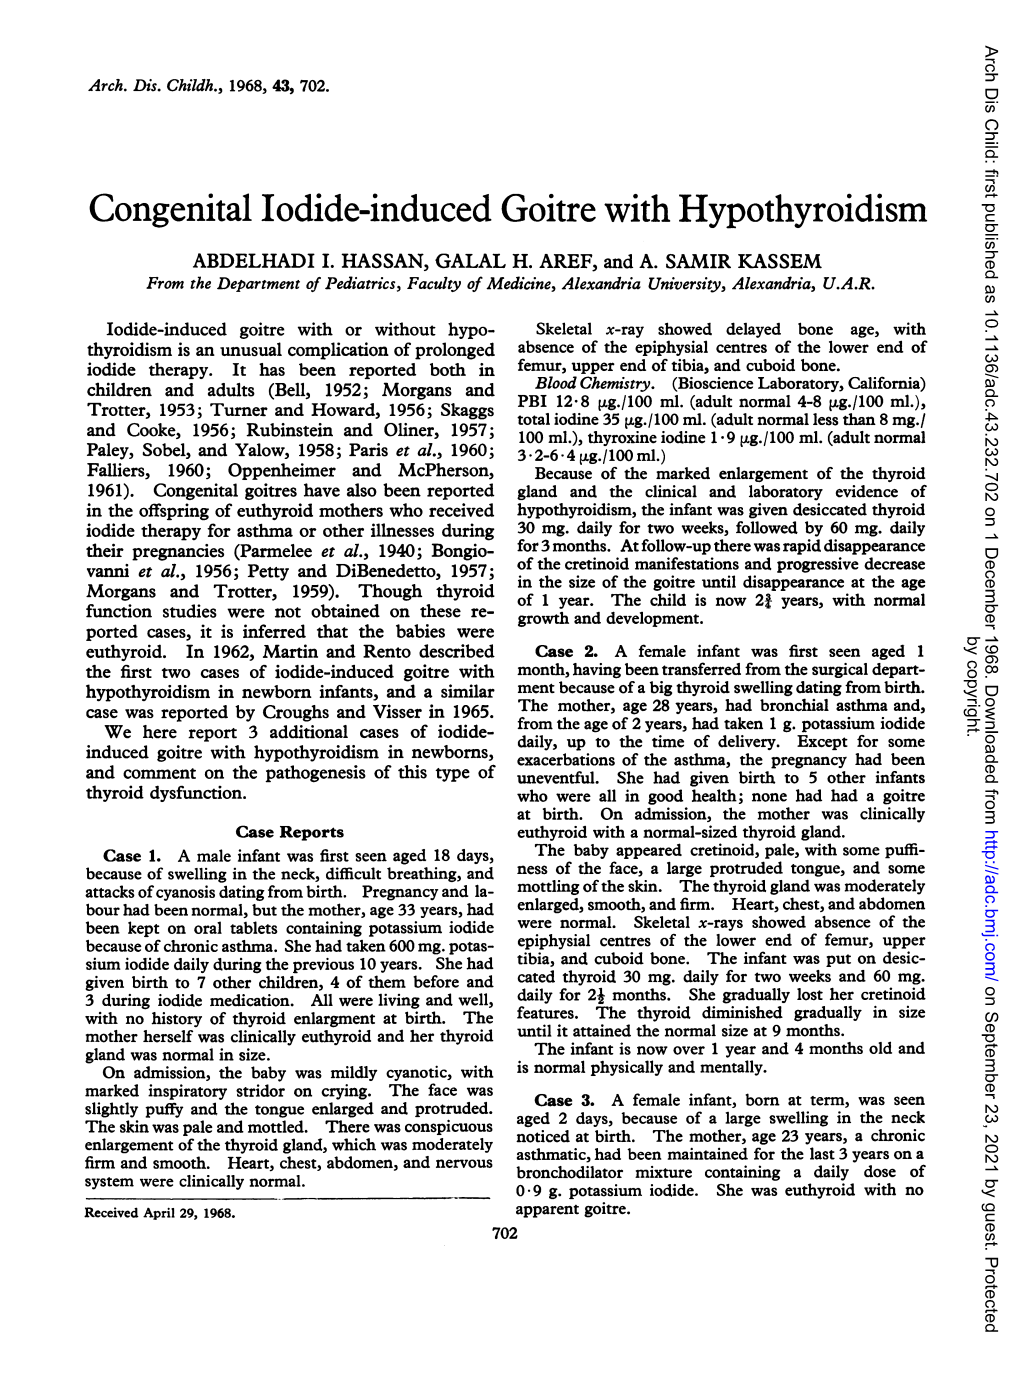 Congenital Iodide-Induced Goitre with Hypothyroidism ABDELHADI I